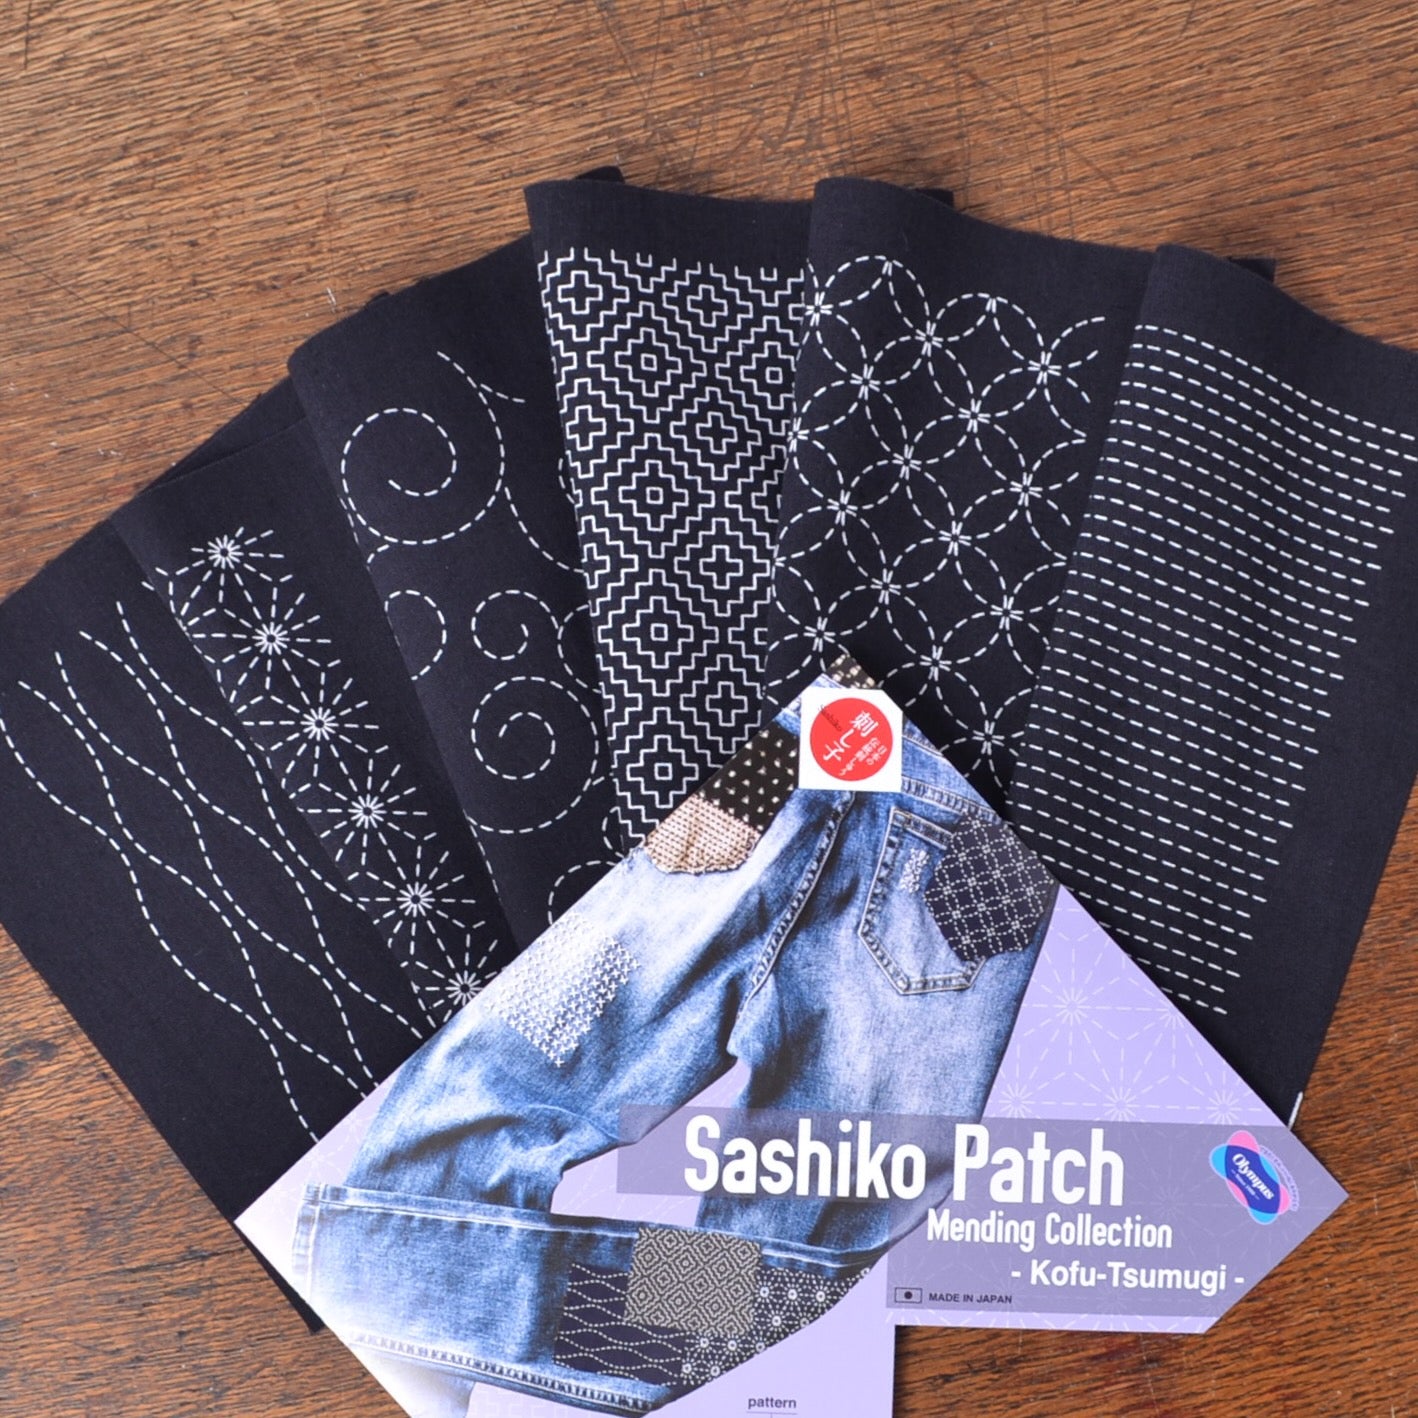 Sashiko Patch mending collection